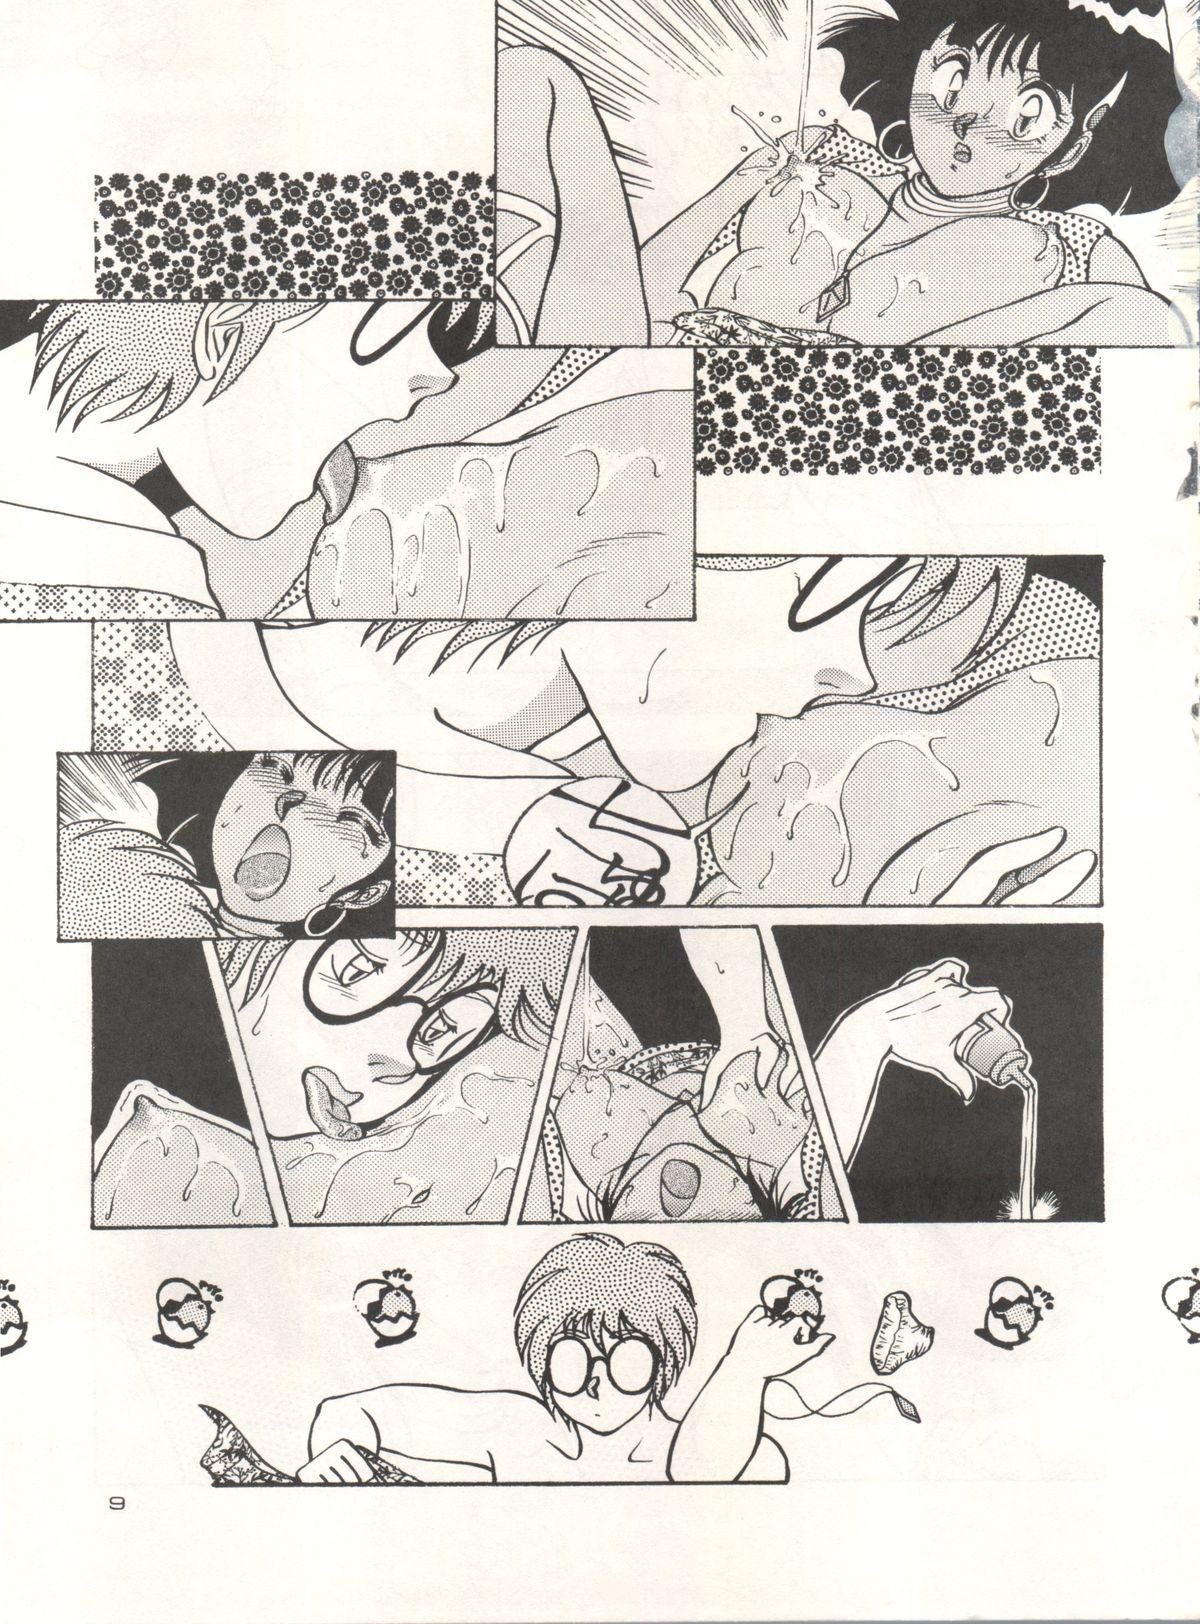 Secret Nadia Girls in Emerald Sea vol. 2 - Minies Club 23 - Fushigi no umi no nadia Family - Page 9